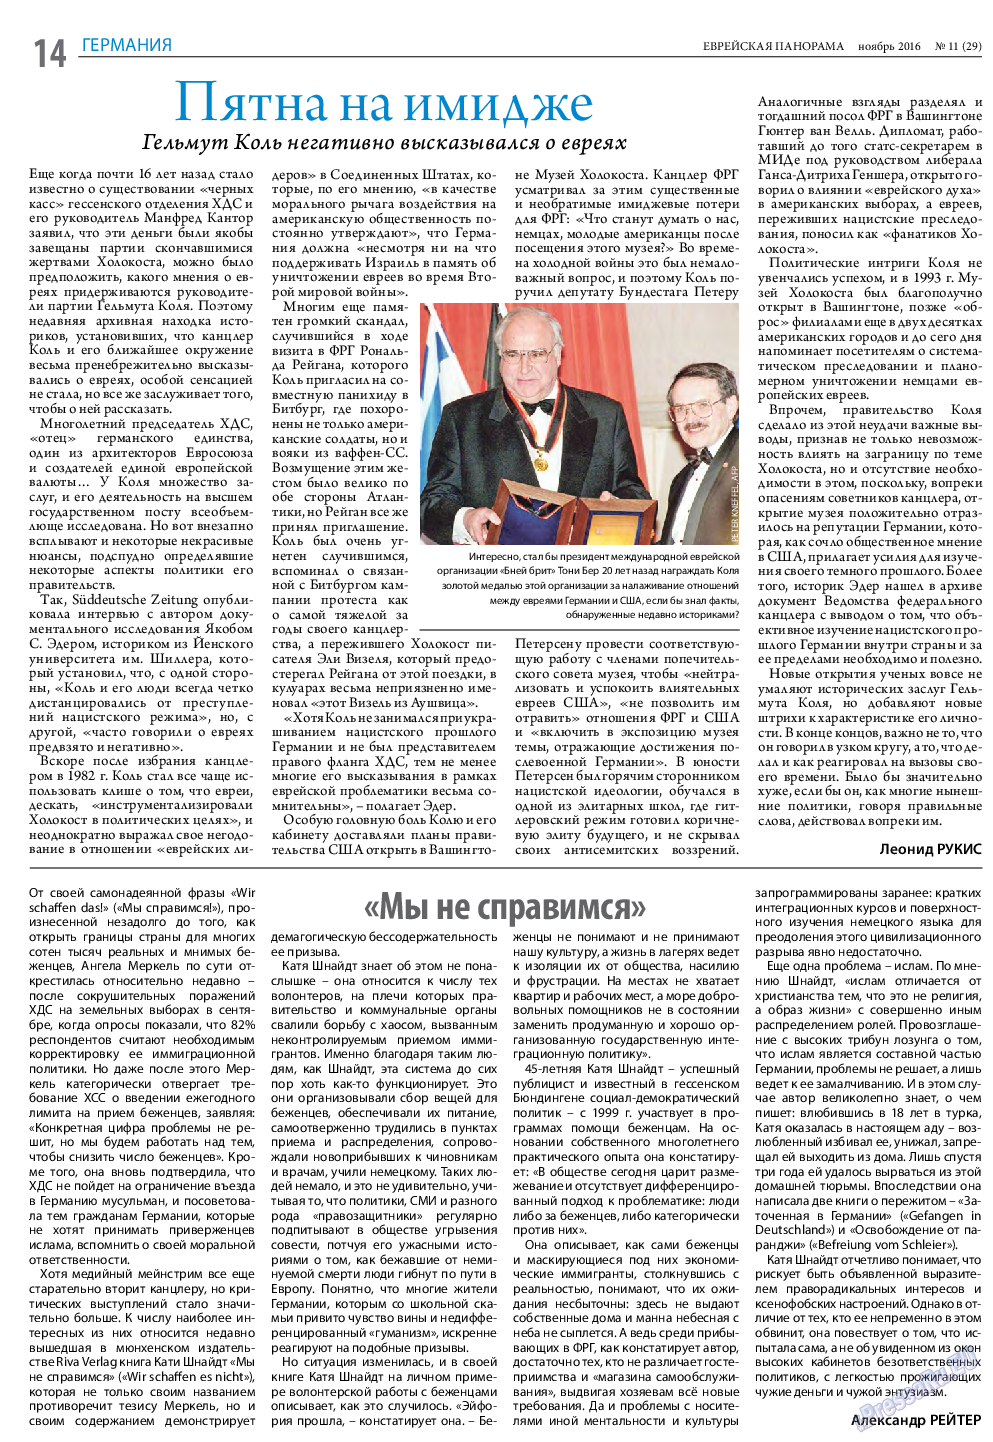 Еврейская панорама, газета. 2016 №11 стр.14